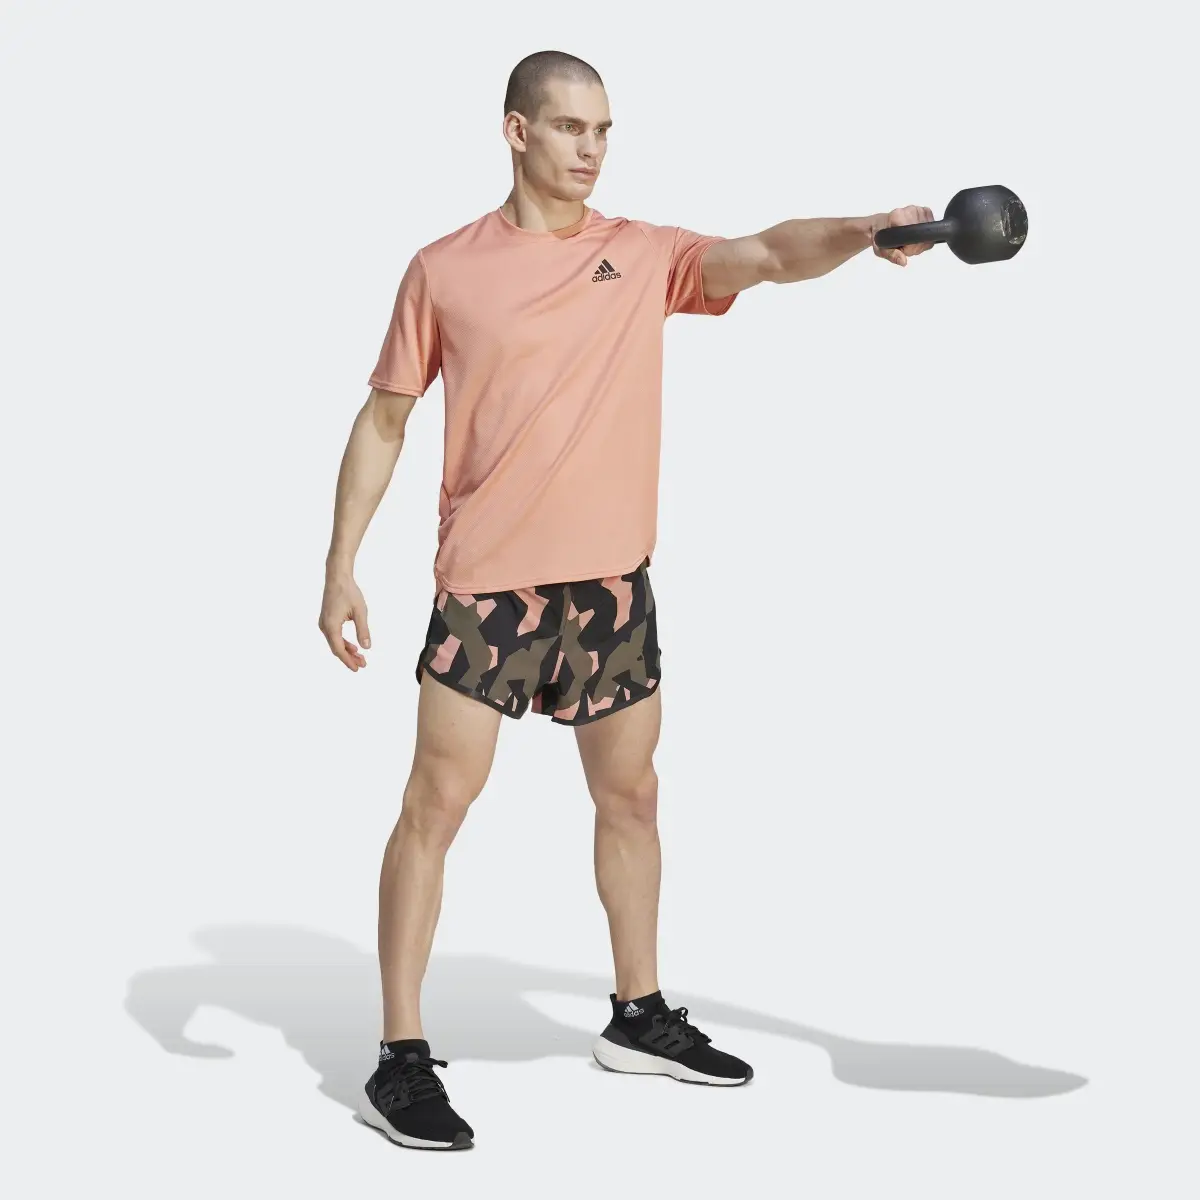 Adidas Designed for Training Pro Series Strength Shorts. 3